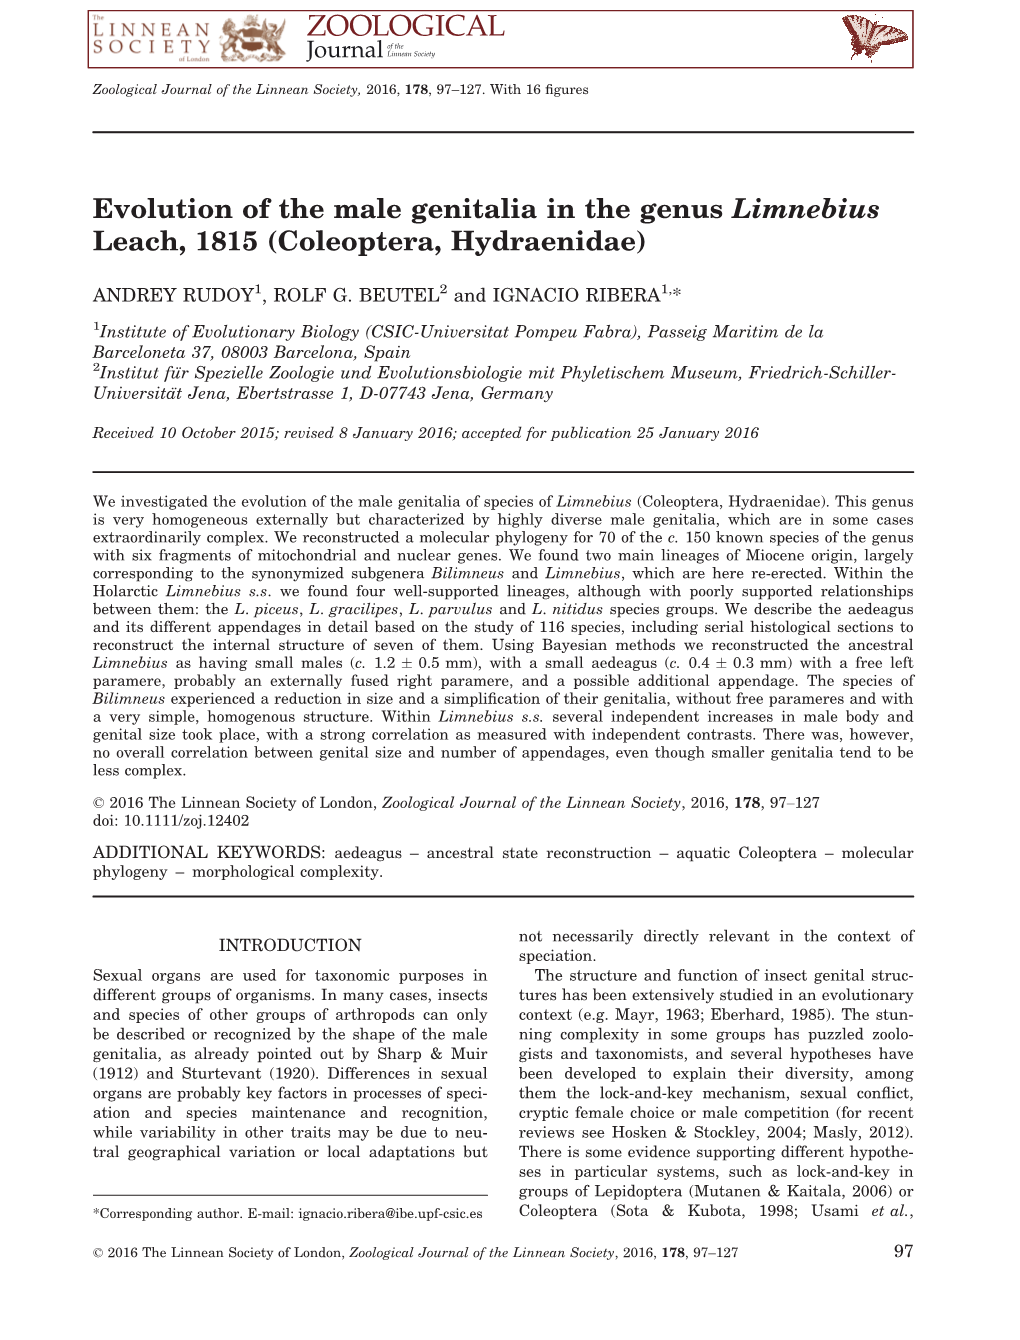 Evolution of the Male Genitalia in the Genus Limnebius Leach, 1815 (Coleoptera, Hydraenidae)